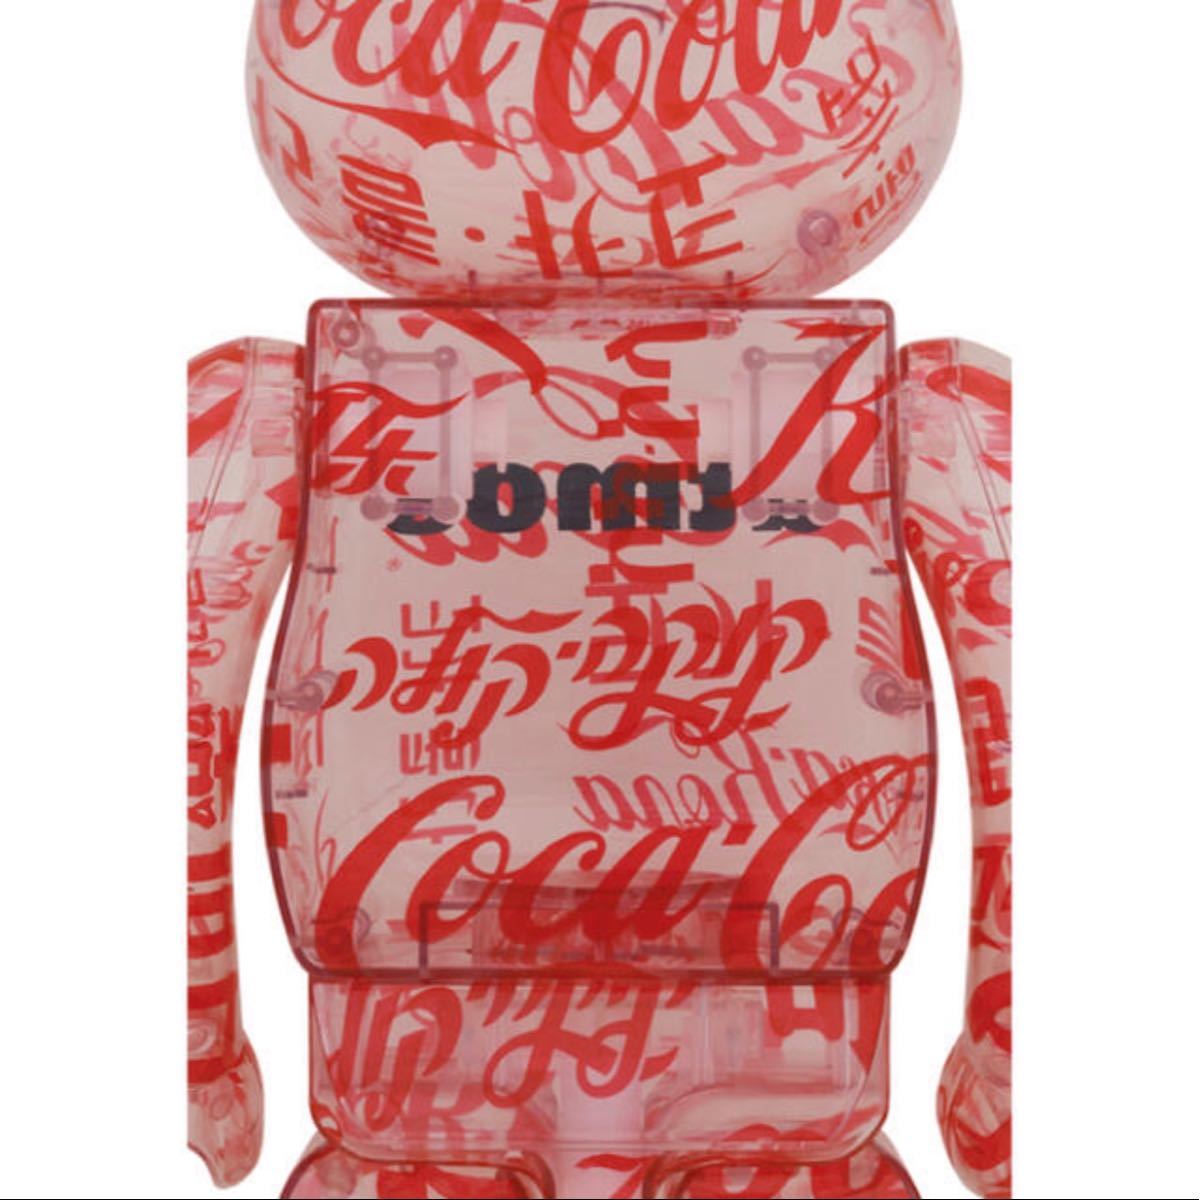 BE@RBRICK atmos x Coca-Cola 1000％ CLEAR virtualofficesnyc.com